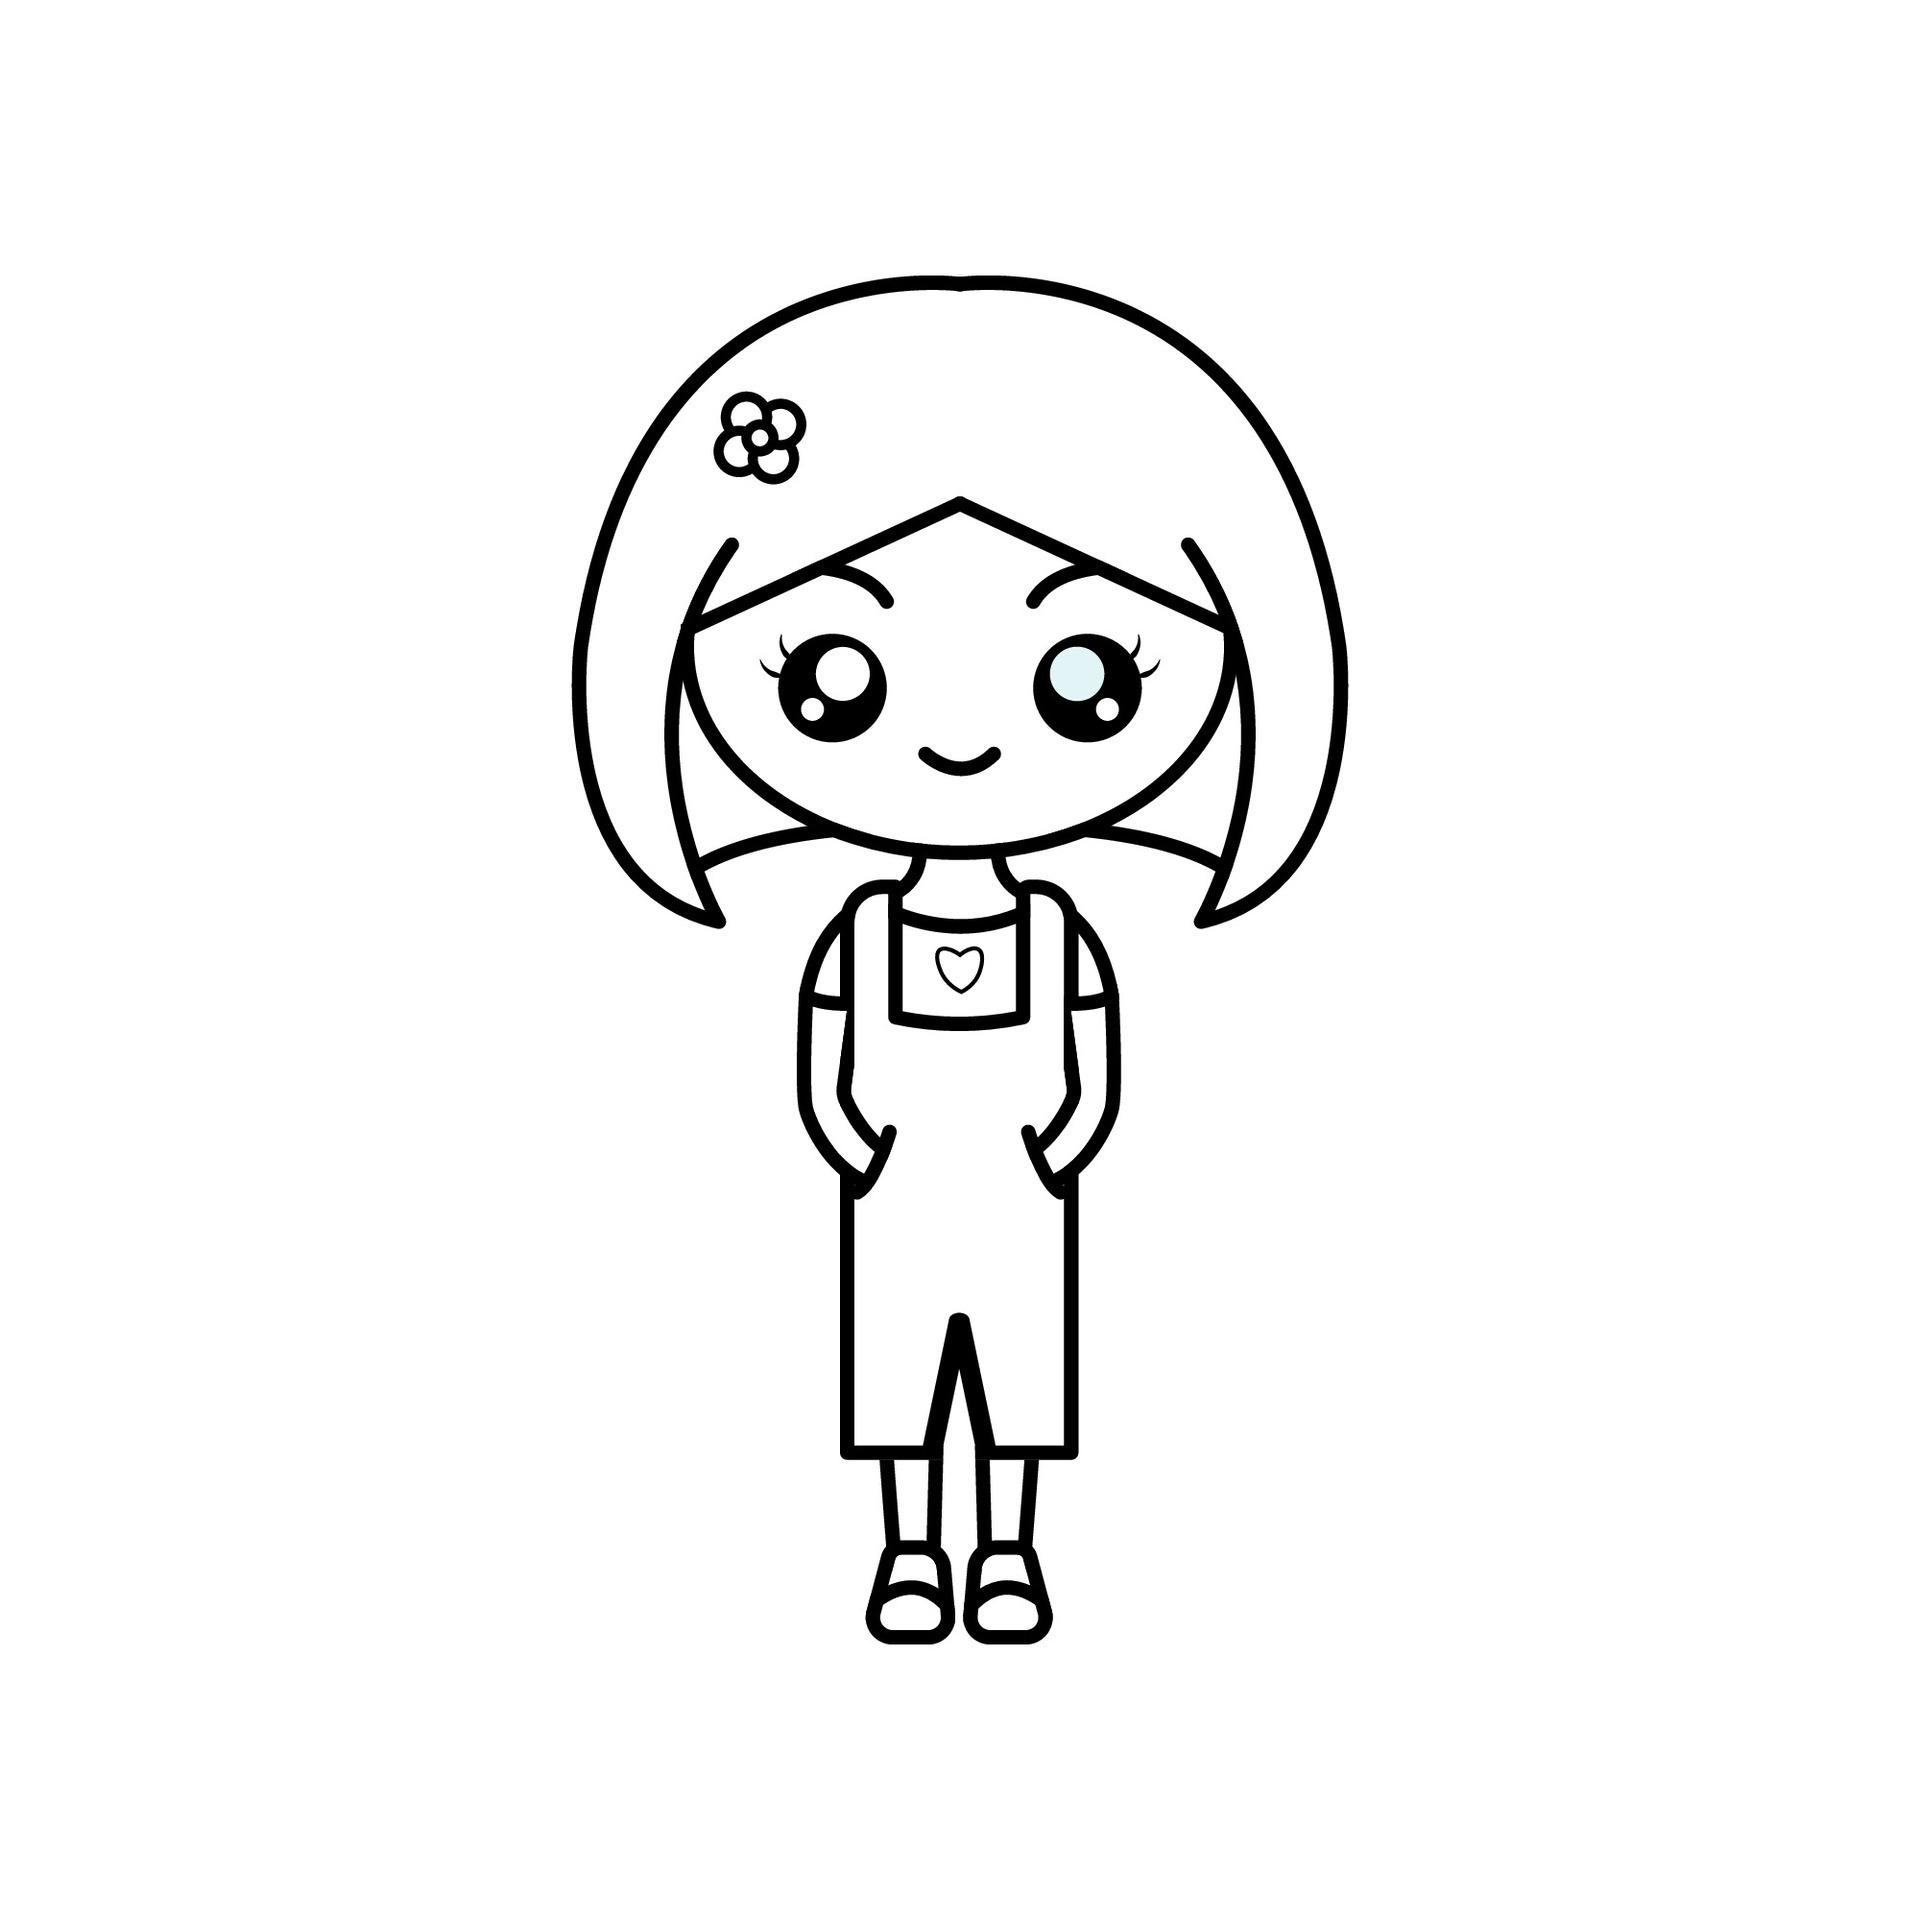 Cute Girl Cartoon for drawing book. vector illustration 27894274